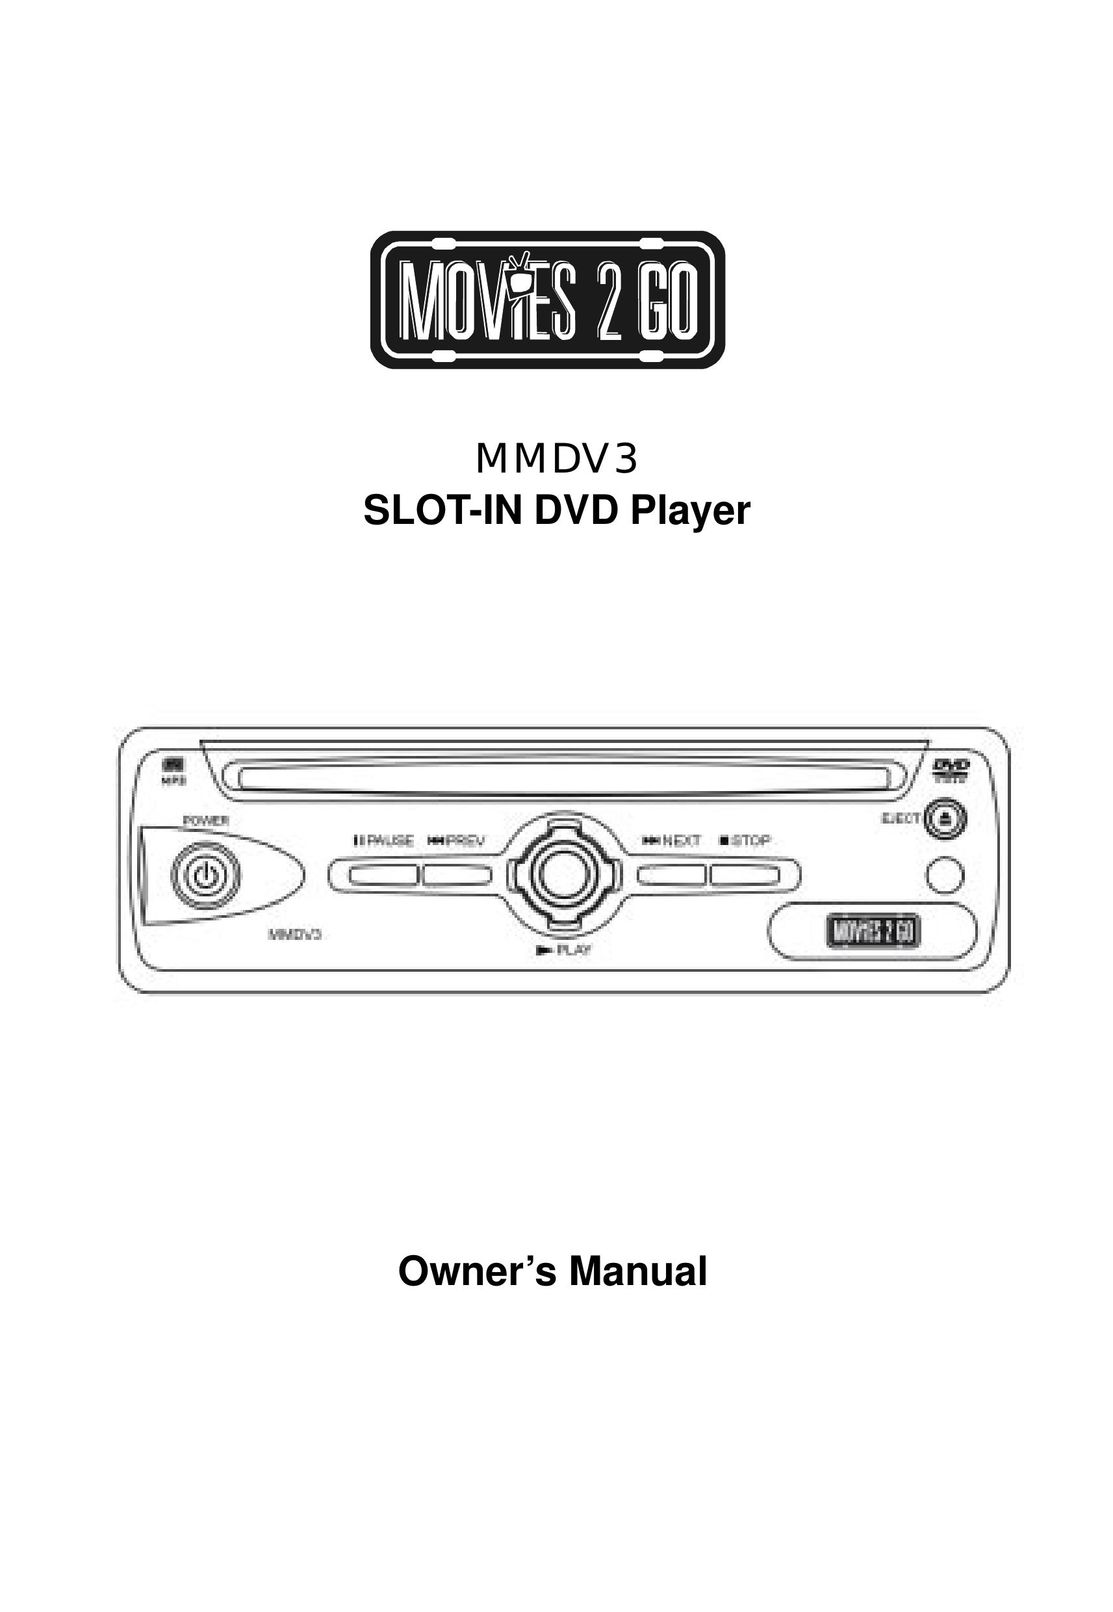 Audiovox MMDV3 DVD Player User Manual